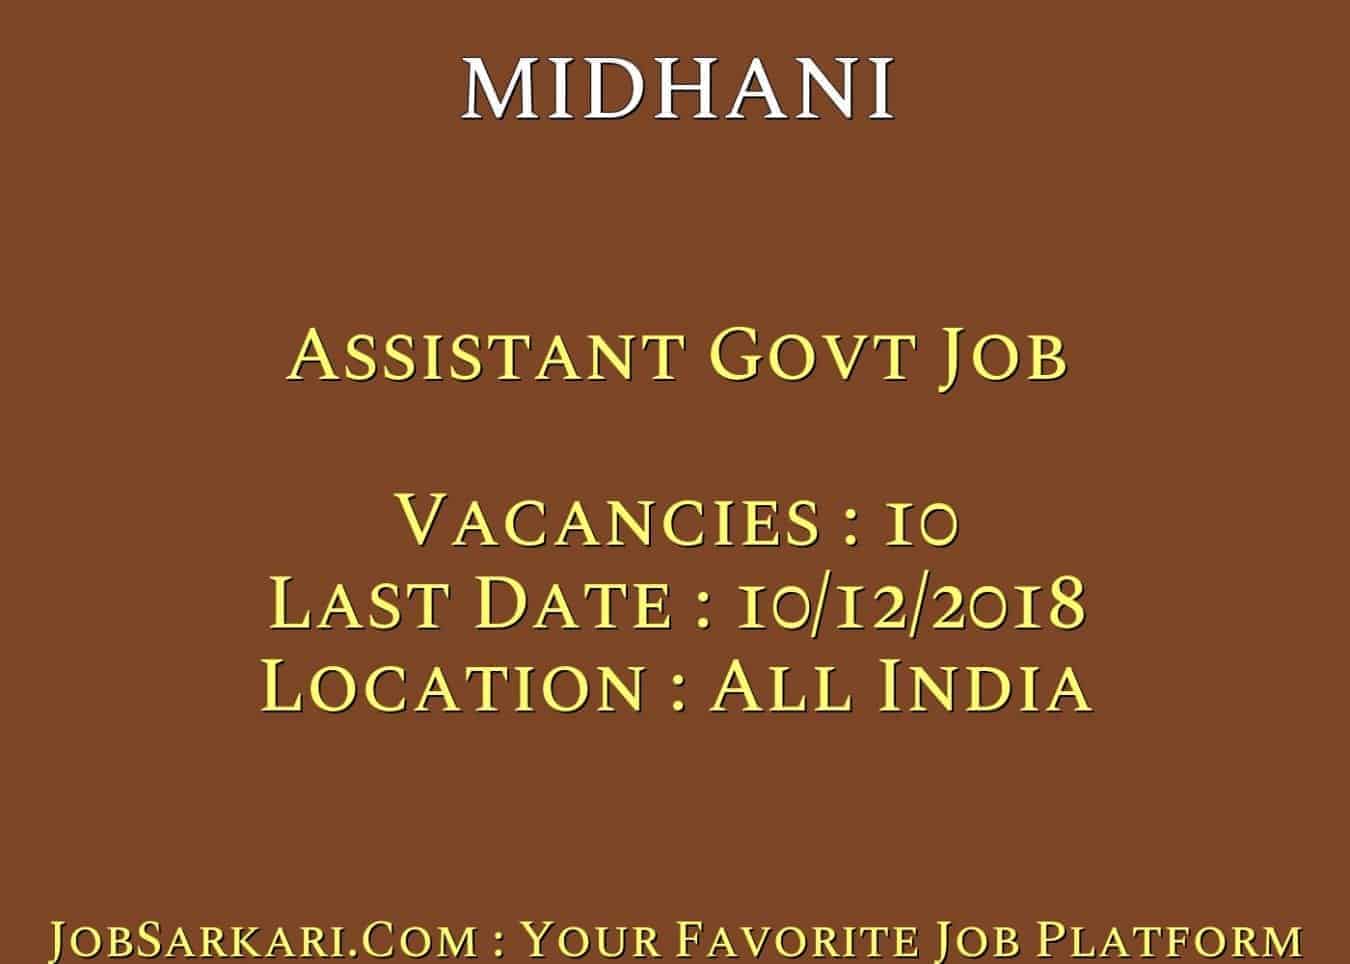 MIDHANI Recruitment 2018 for Assistant Govt Job